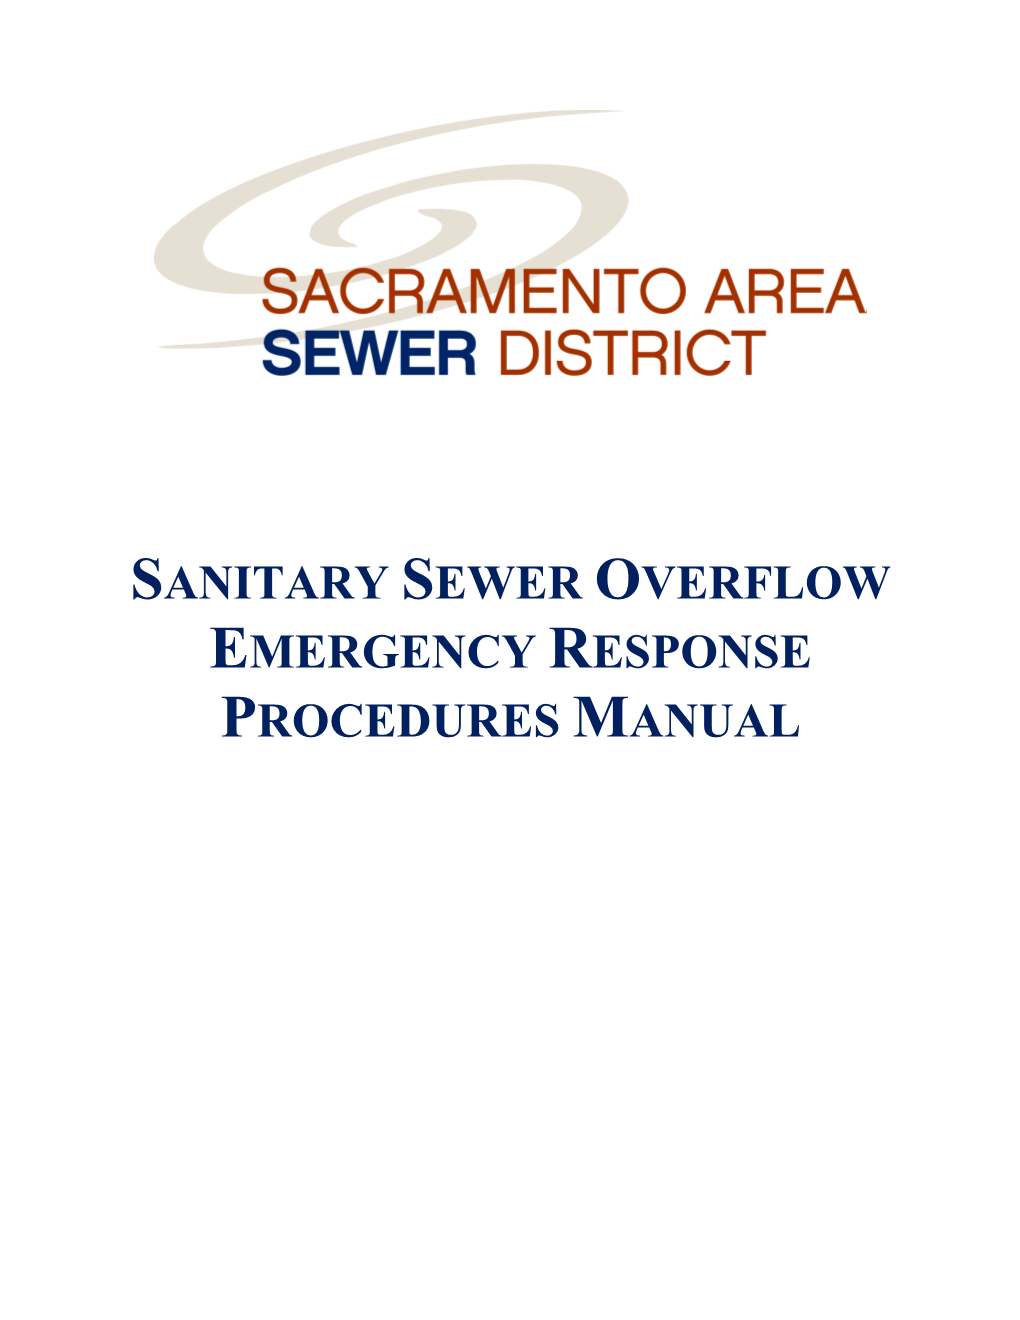 SSO Emergency Response Procedures Manual